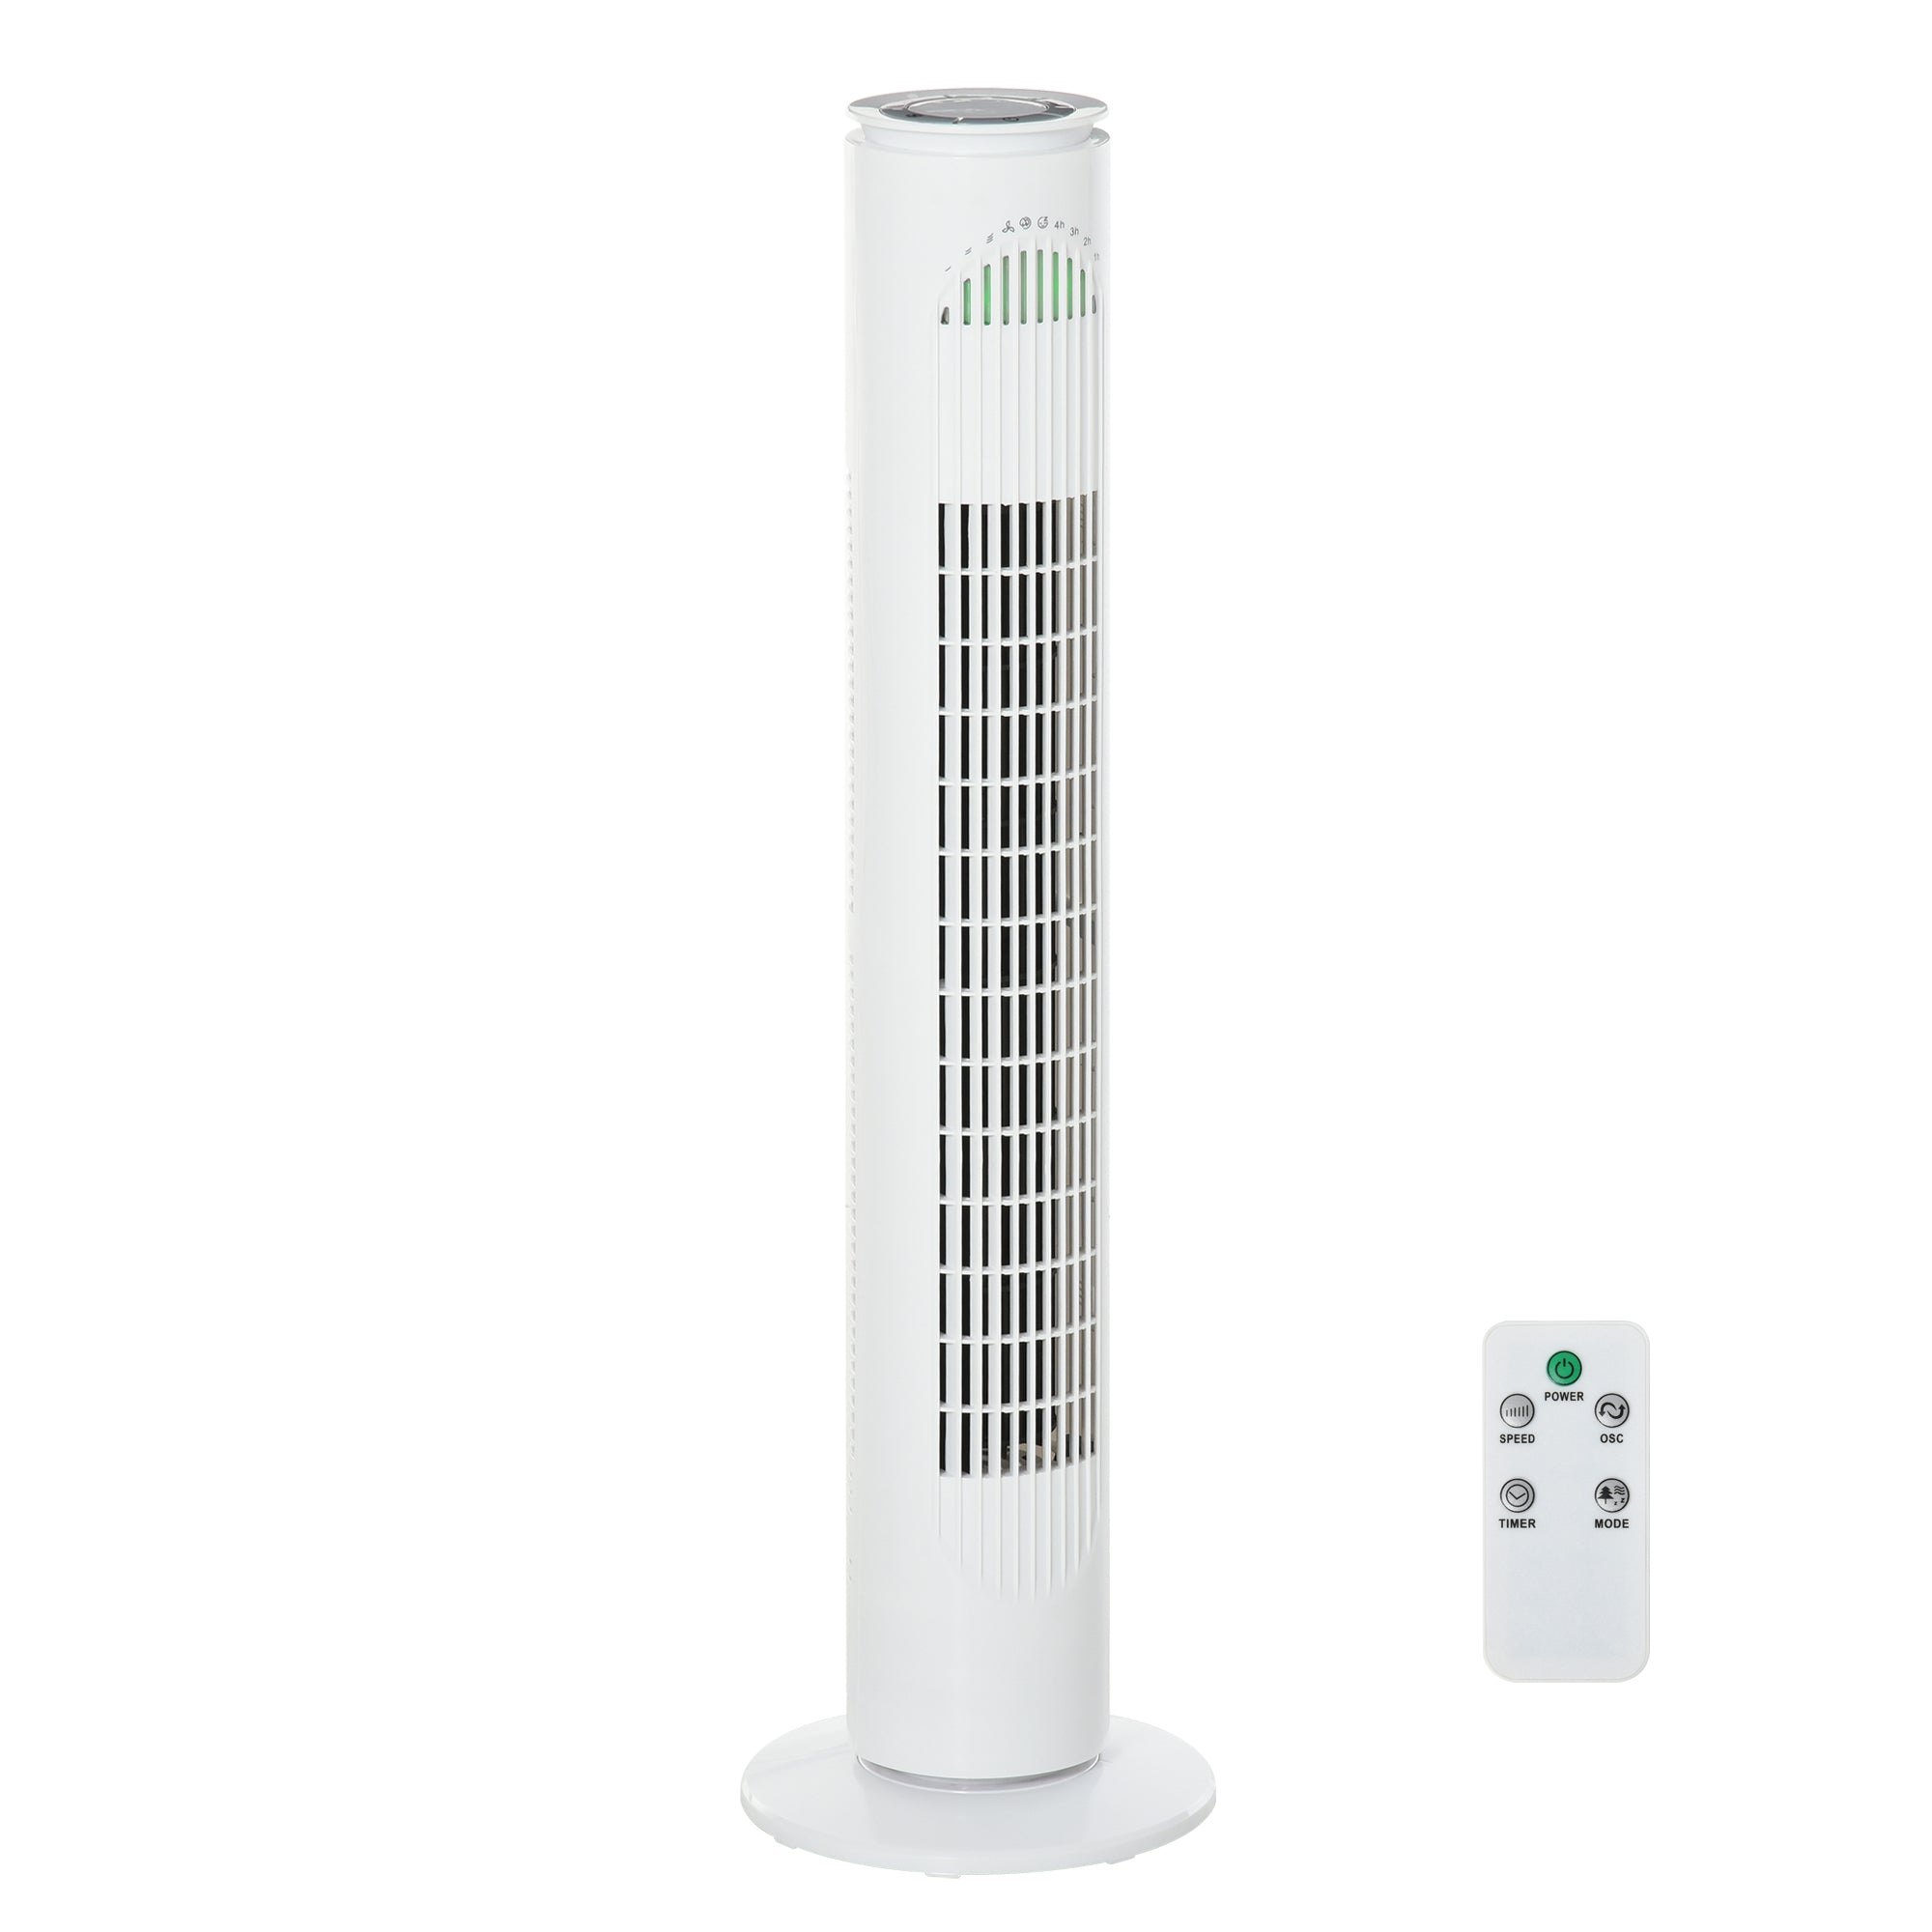 Nancy's Kaneohe tower fan - Standing Fan - Remote control - ABS Plastic - White - 22 x 77 cm